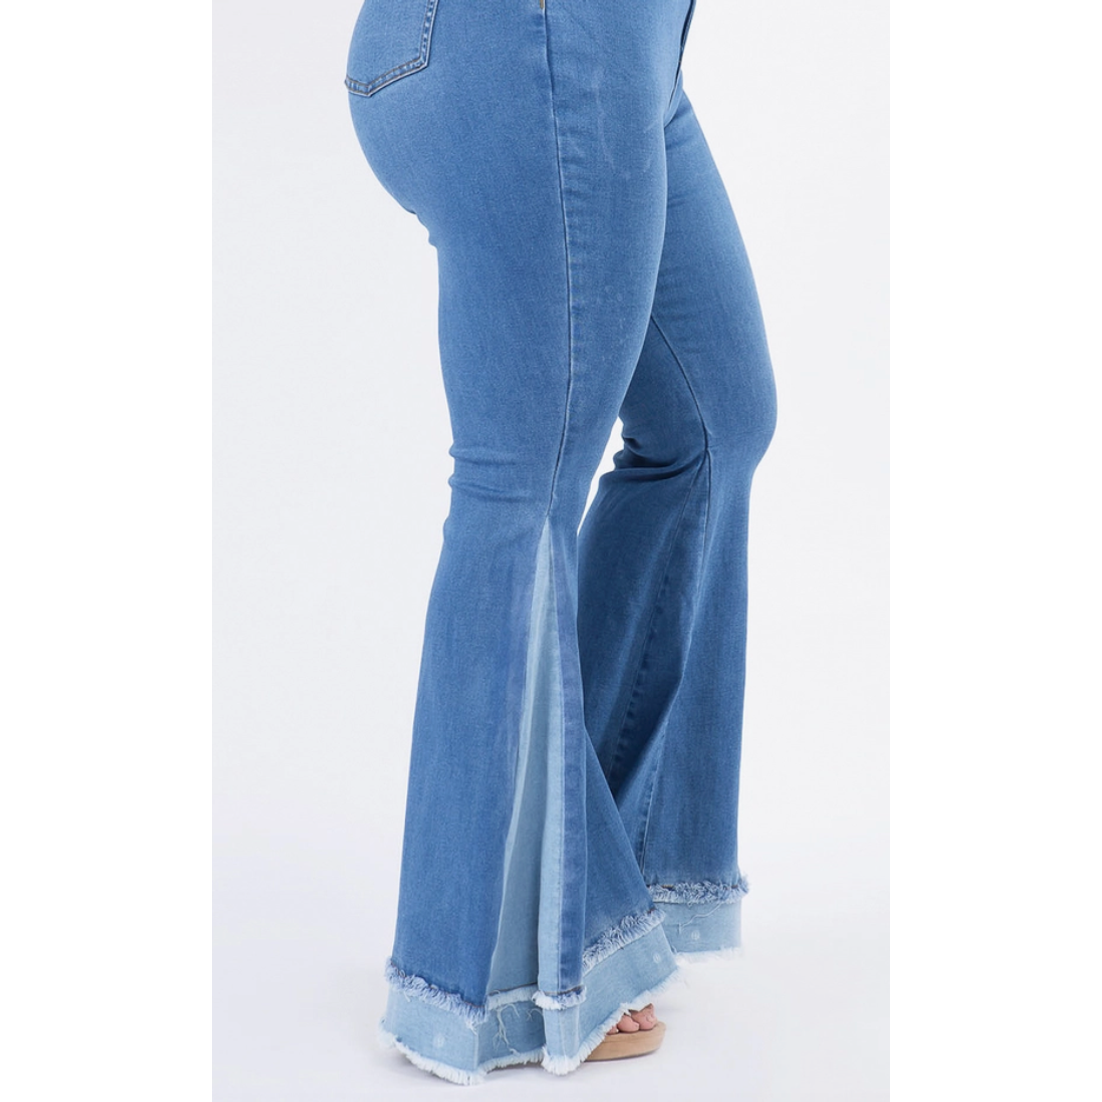 Two Tone Curvy Fit Bell Bottom Flare Jeans – Lilla Cavallo